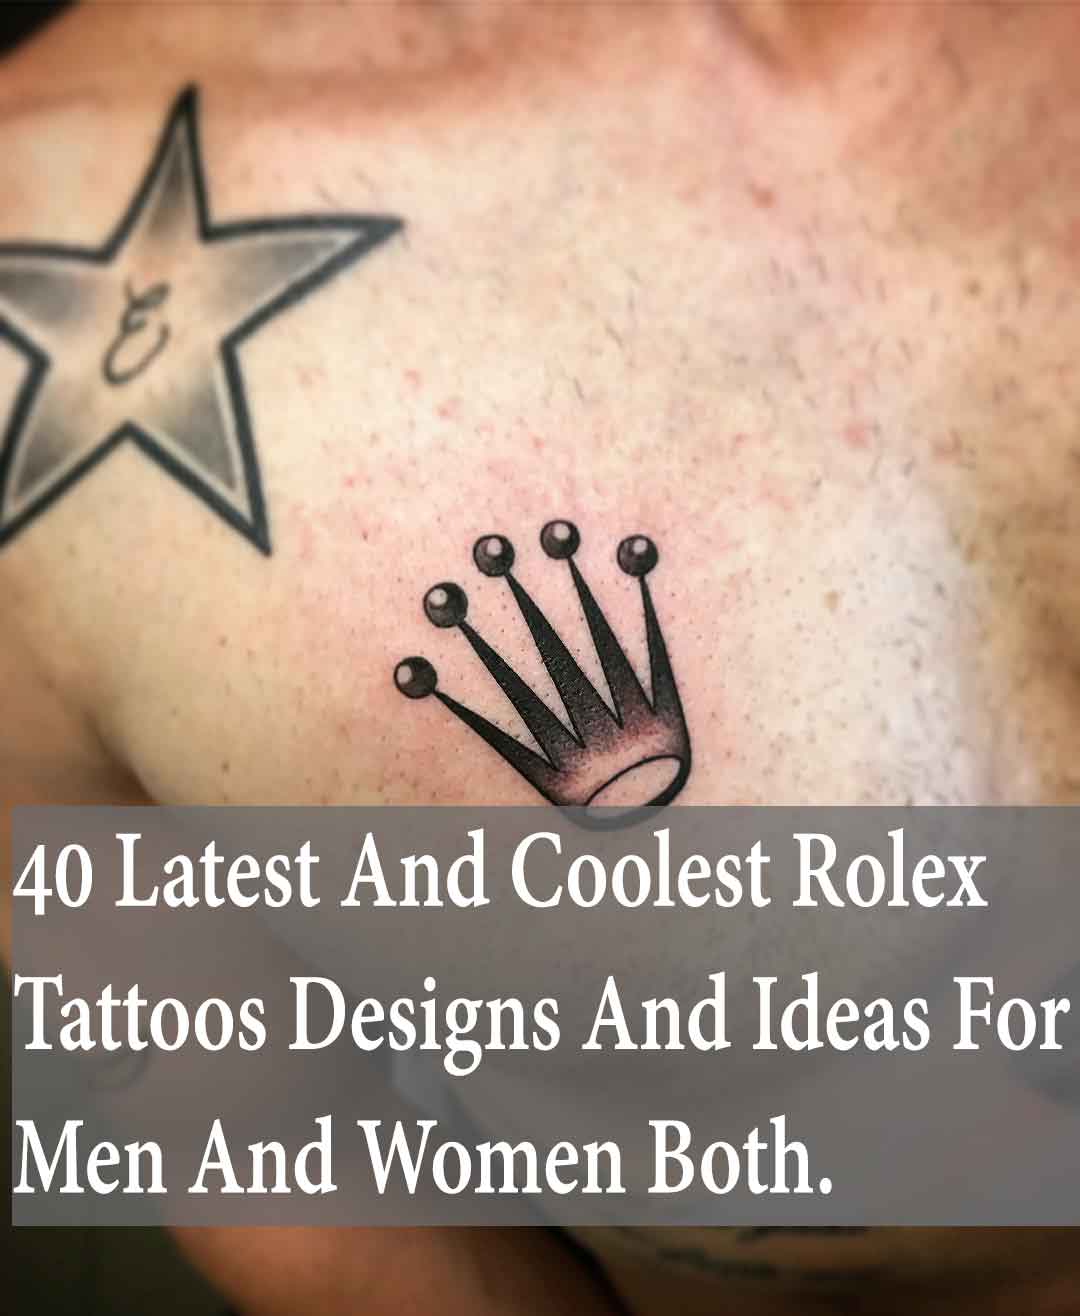 Rolex Tattoos - 40 Latest Rolex Tattoo designs & Ideas for Men & Women